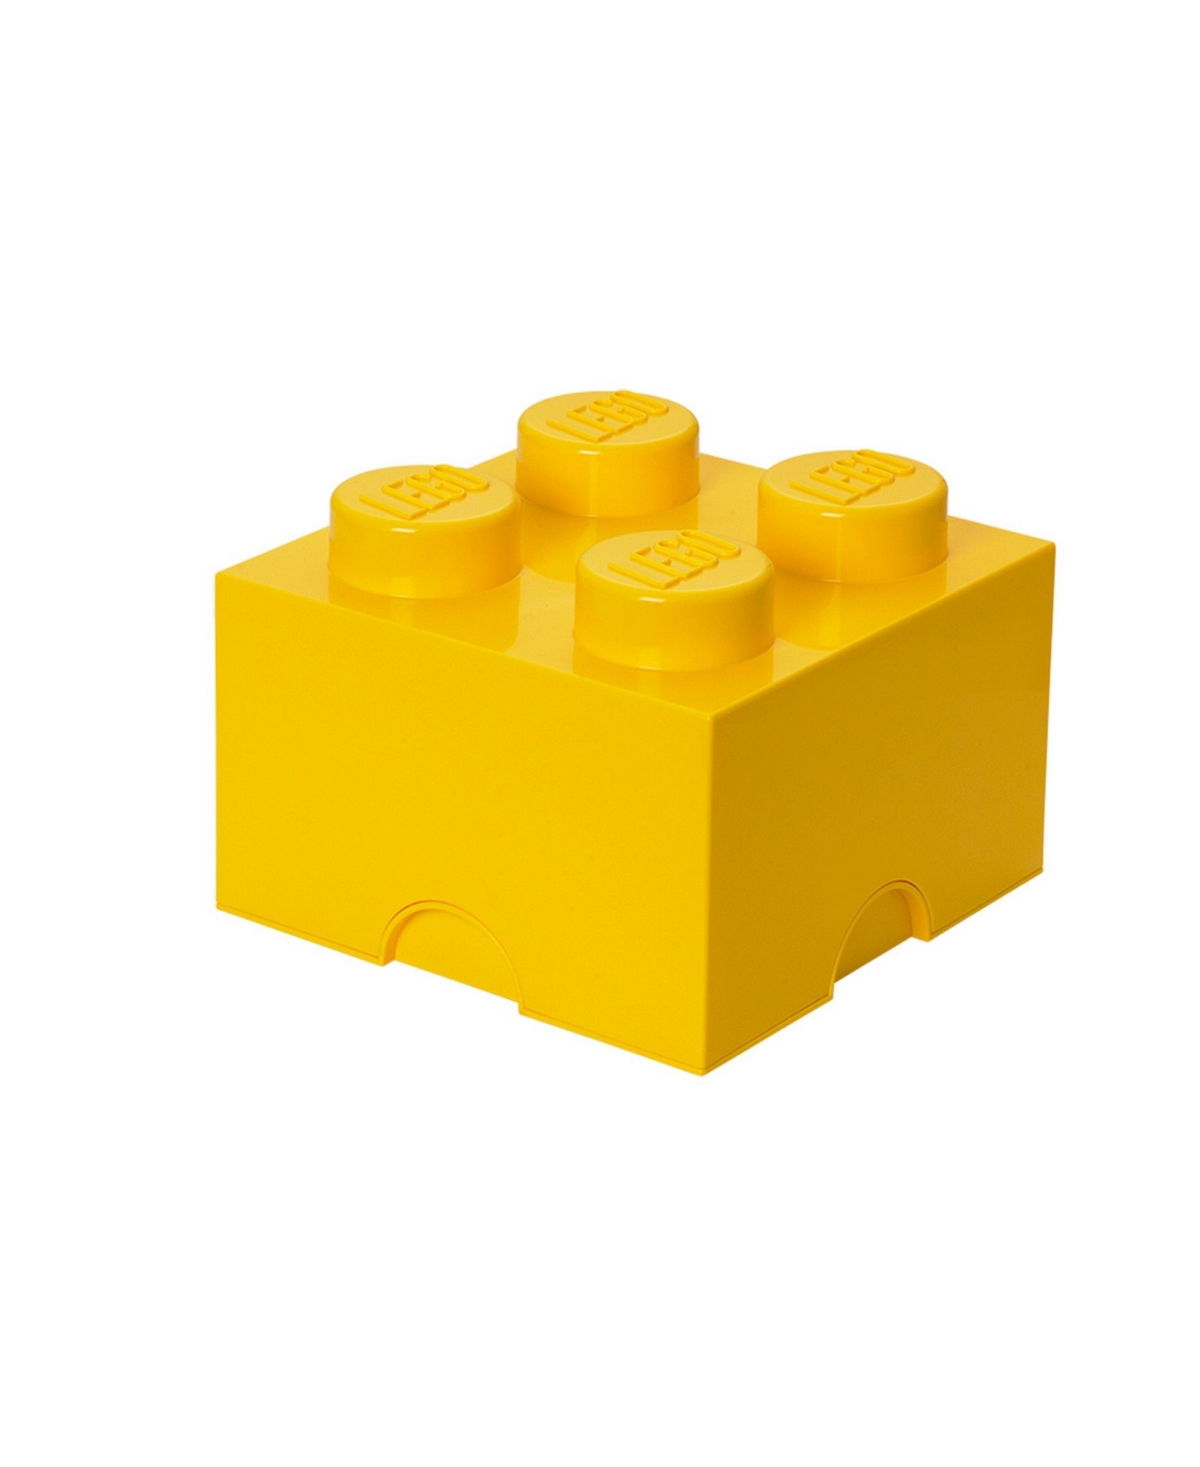 Lego Kids' Storage Brick With 4 Knobs In Yellow